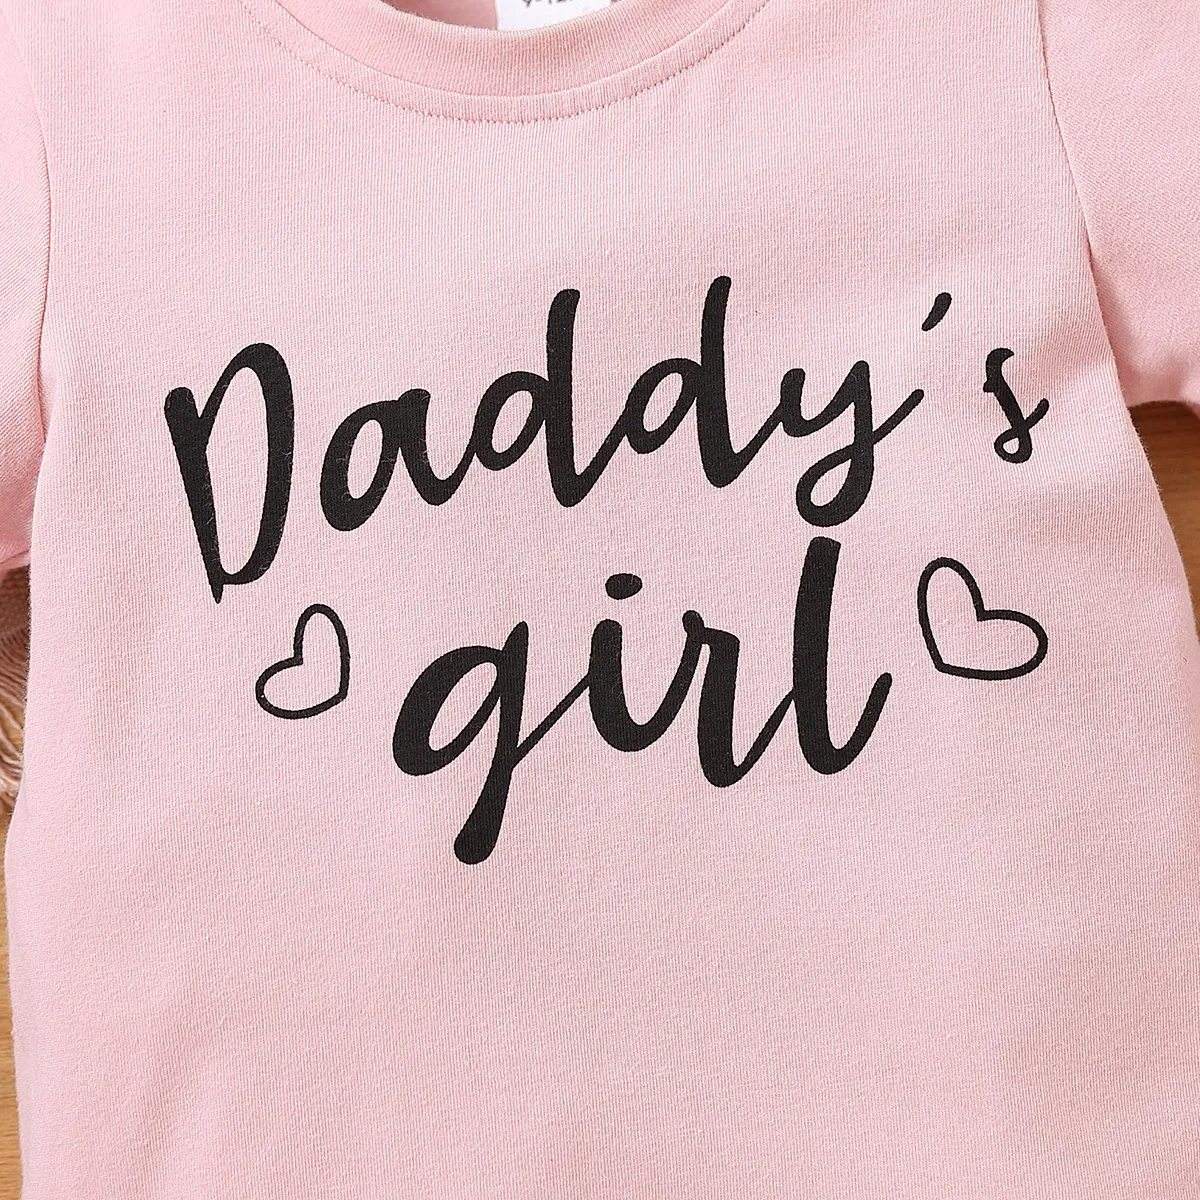 Baby Boy/Girl 95% Cotton Short-sleeve Letter Print Tee Pink big image 1